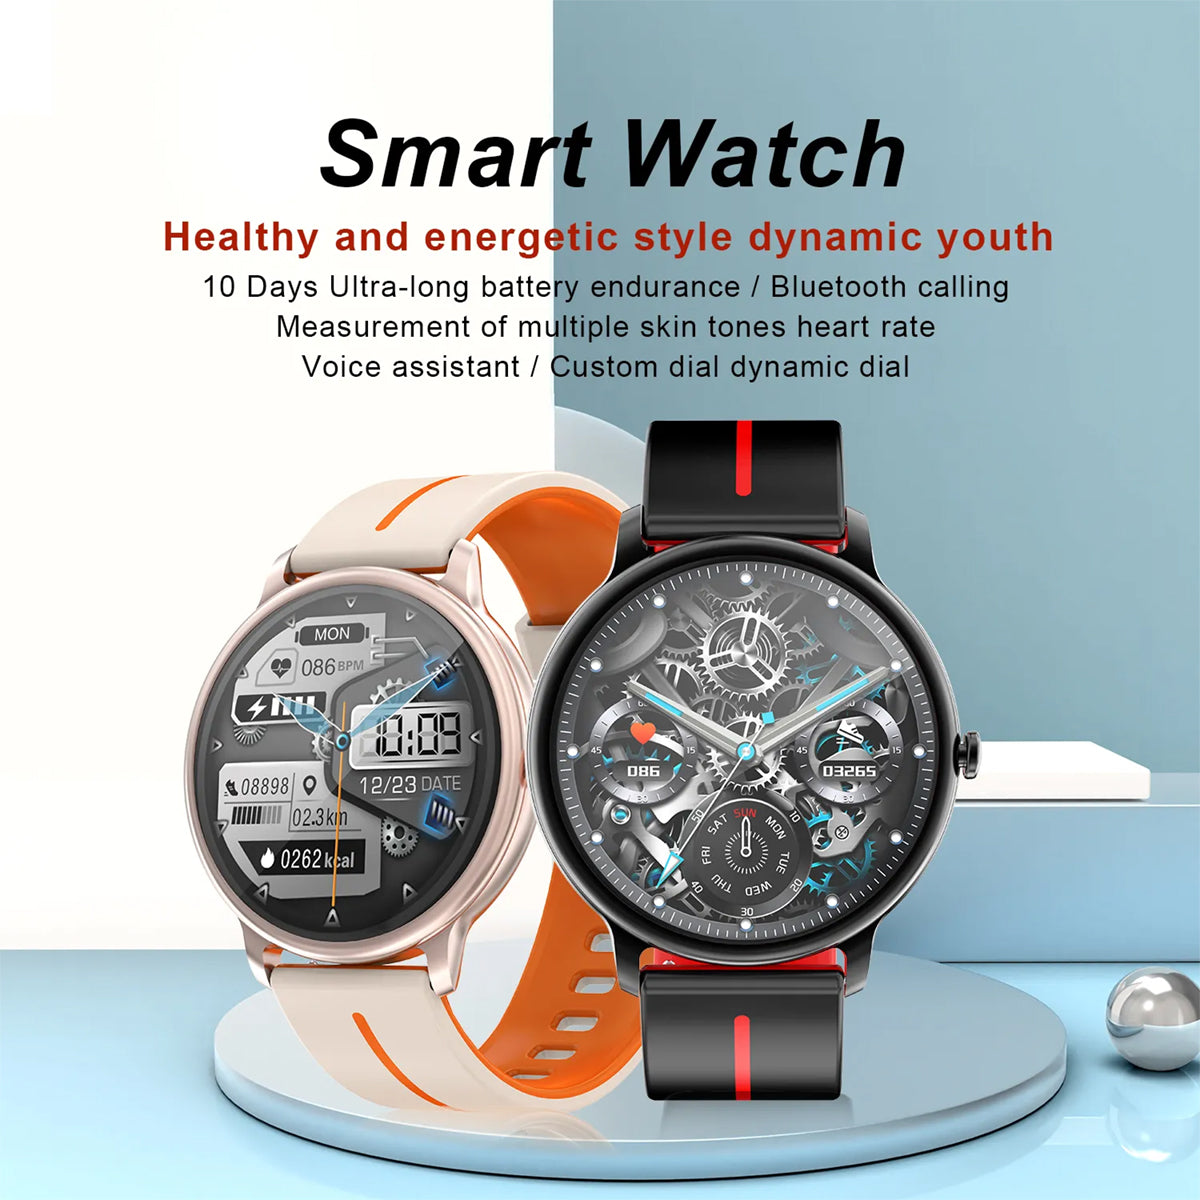 Reloj Smartwatch G98 Fralugio Full Touch Hr Hd Mide Glucosa